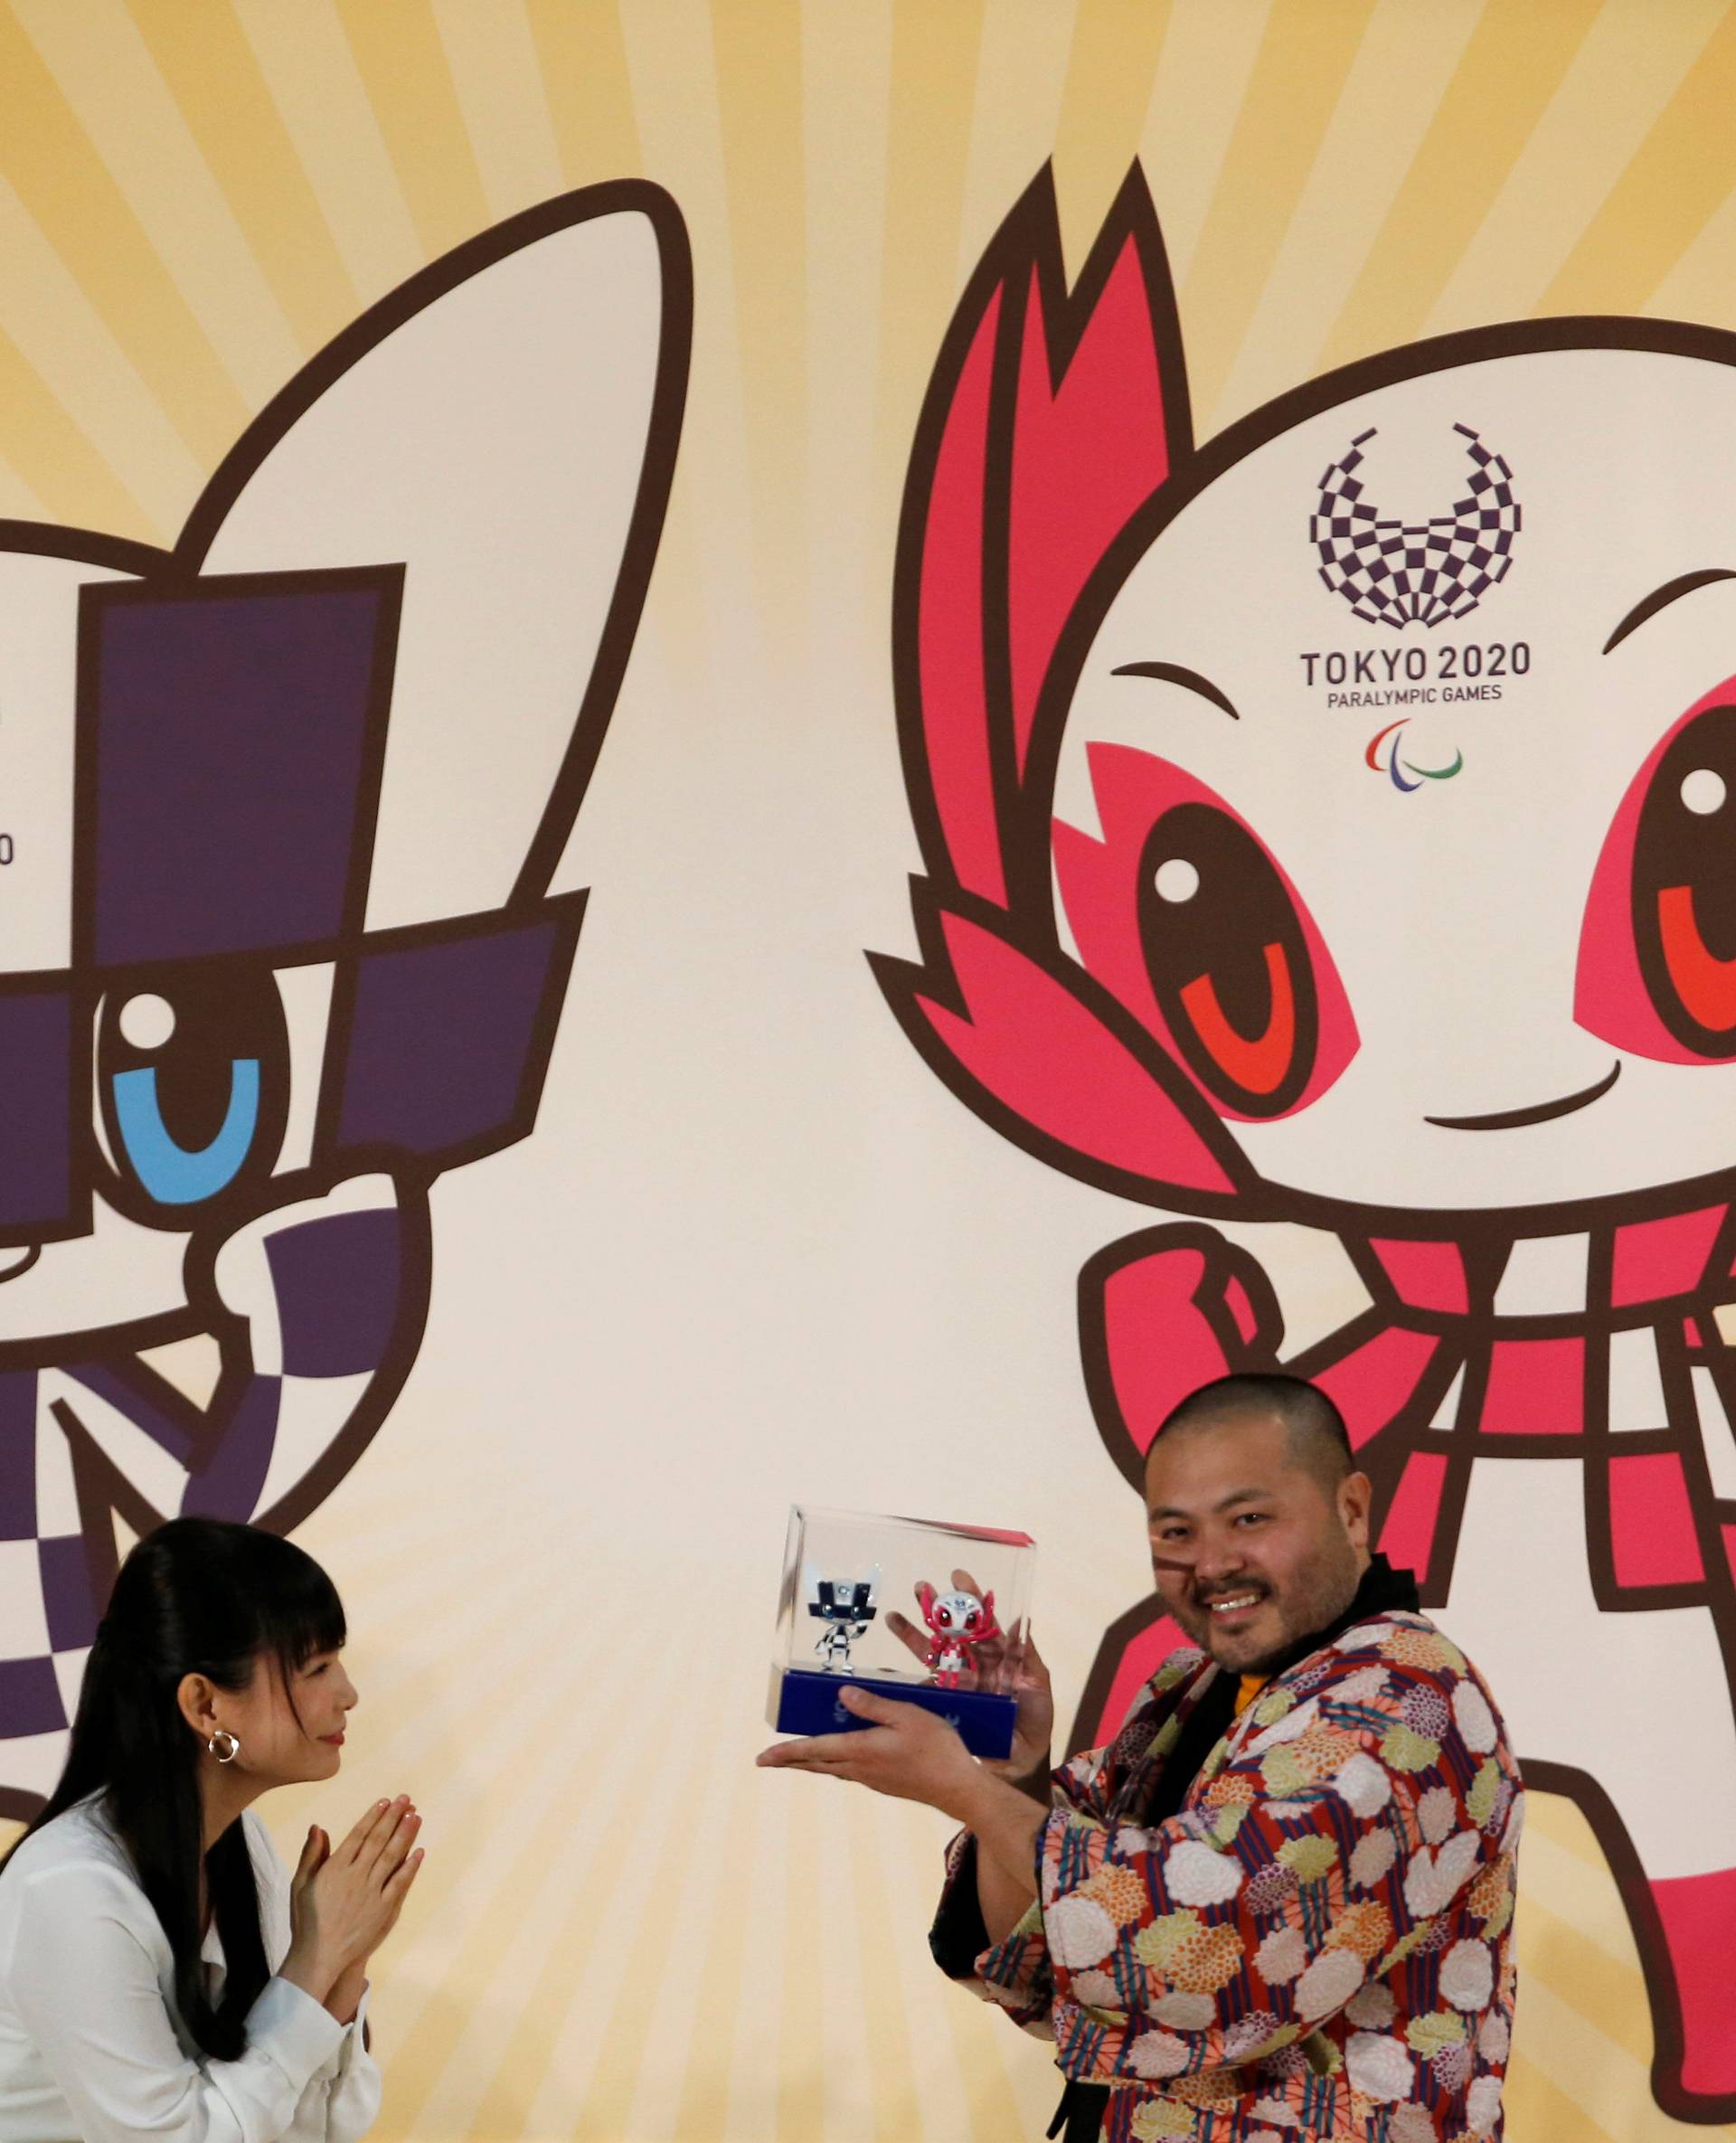 Tokyo Olympics organizers unveil the mascot for the Tokyo 2020 Olympics and Paralympics in Tokyo